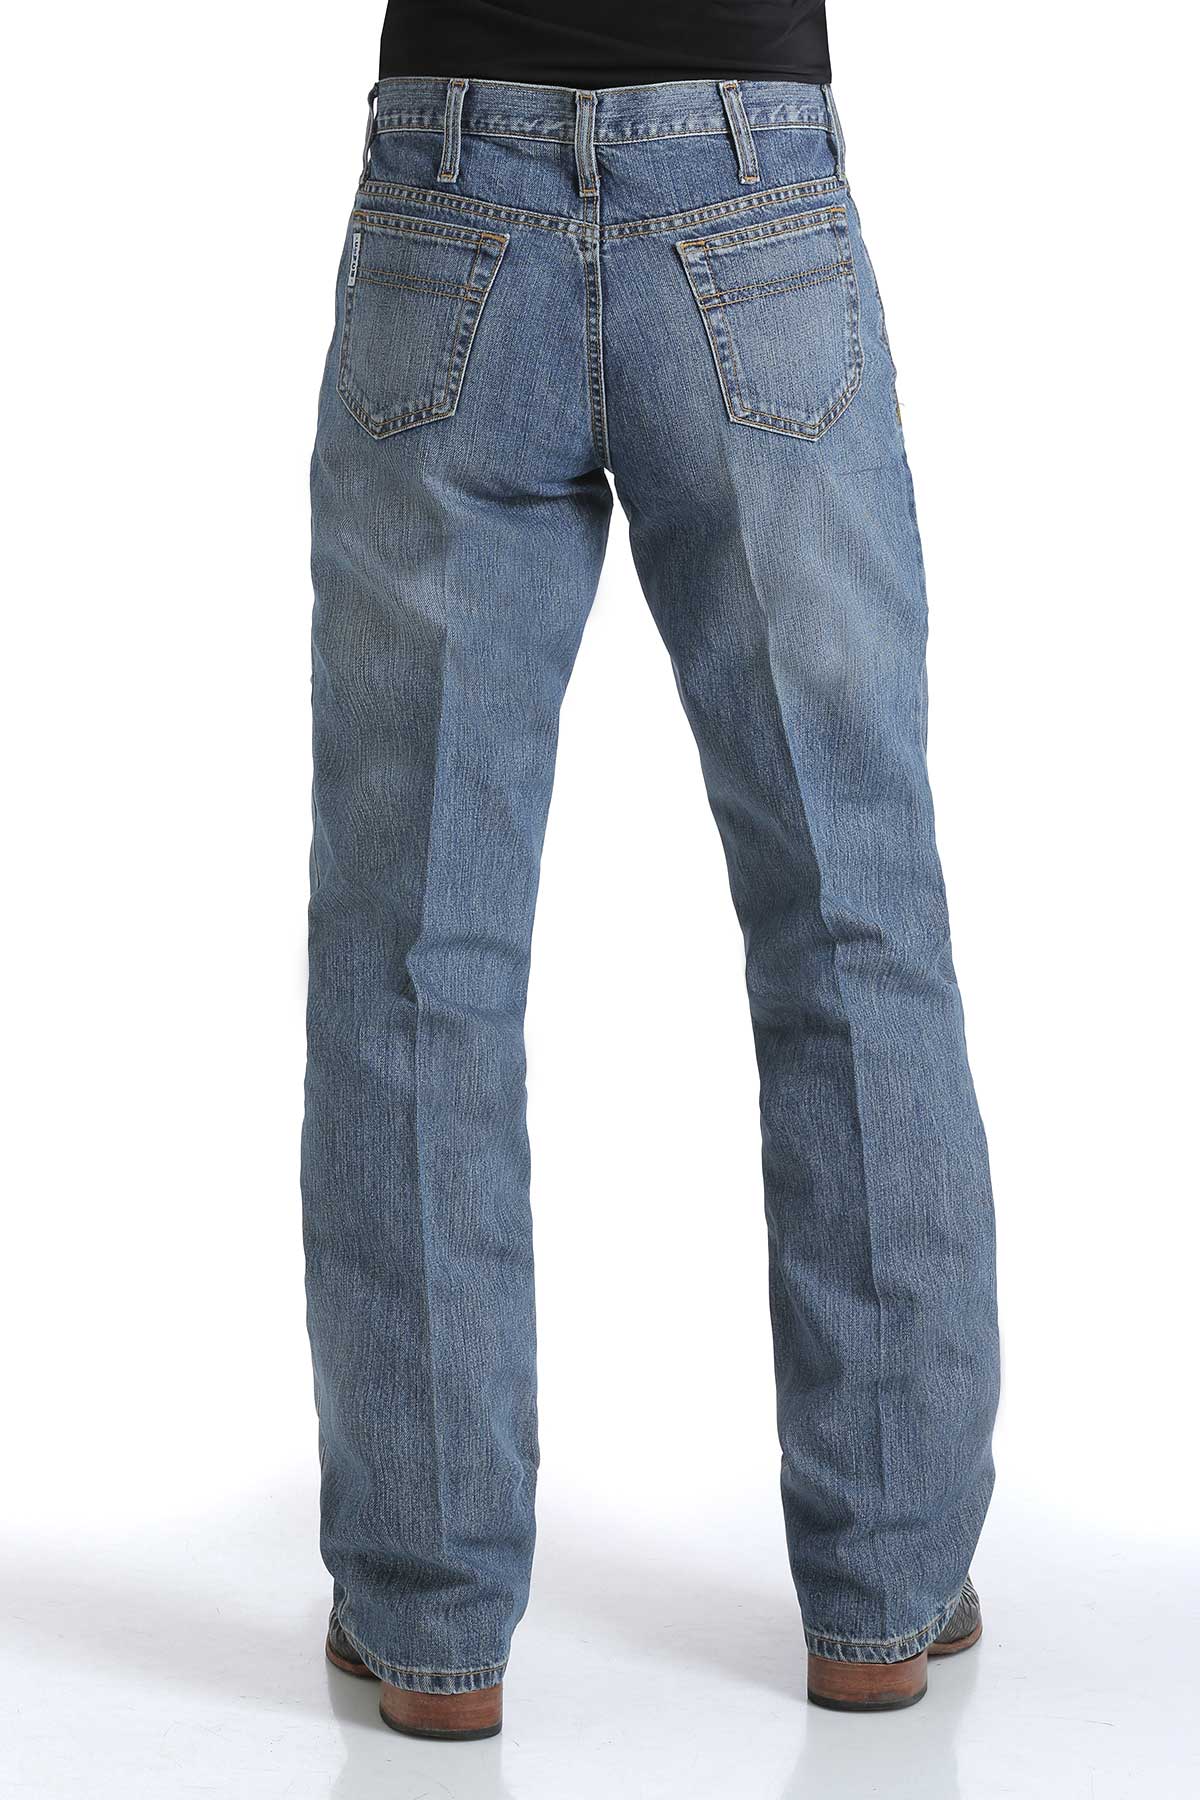 Cinch Men's White Label Medium 003 Relaxed Mid Rise Straight Jeans - Medium  Indigo - Welcome to Apple Saddlery | www.applesaddlery.com | Family Owned  